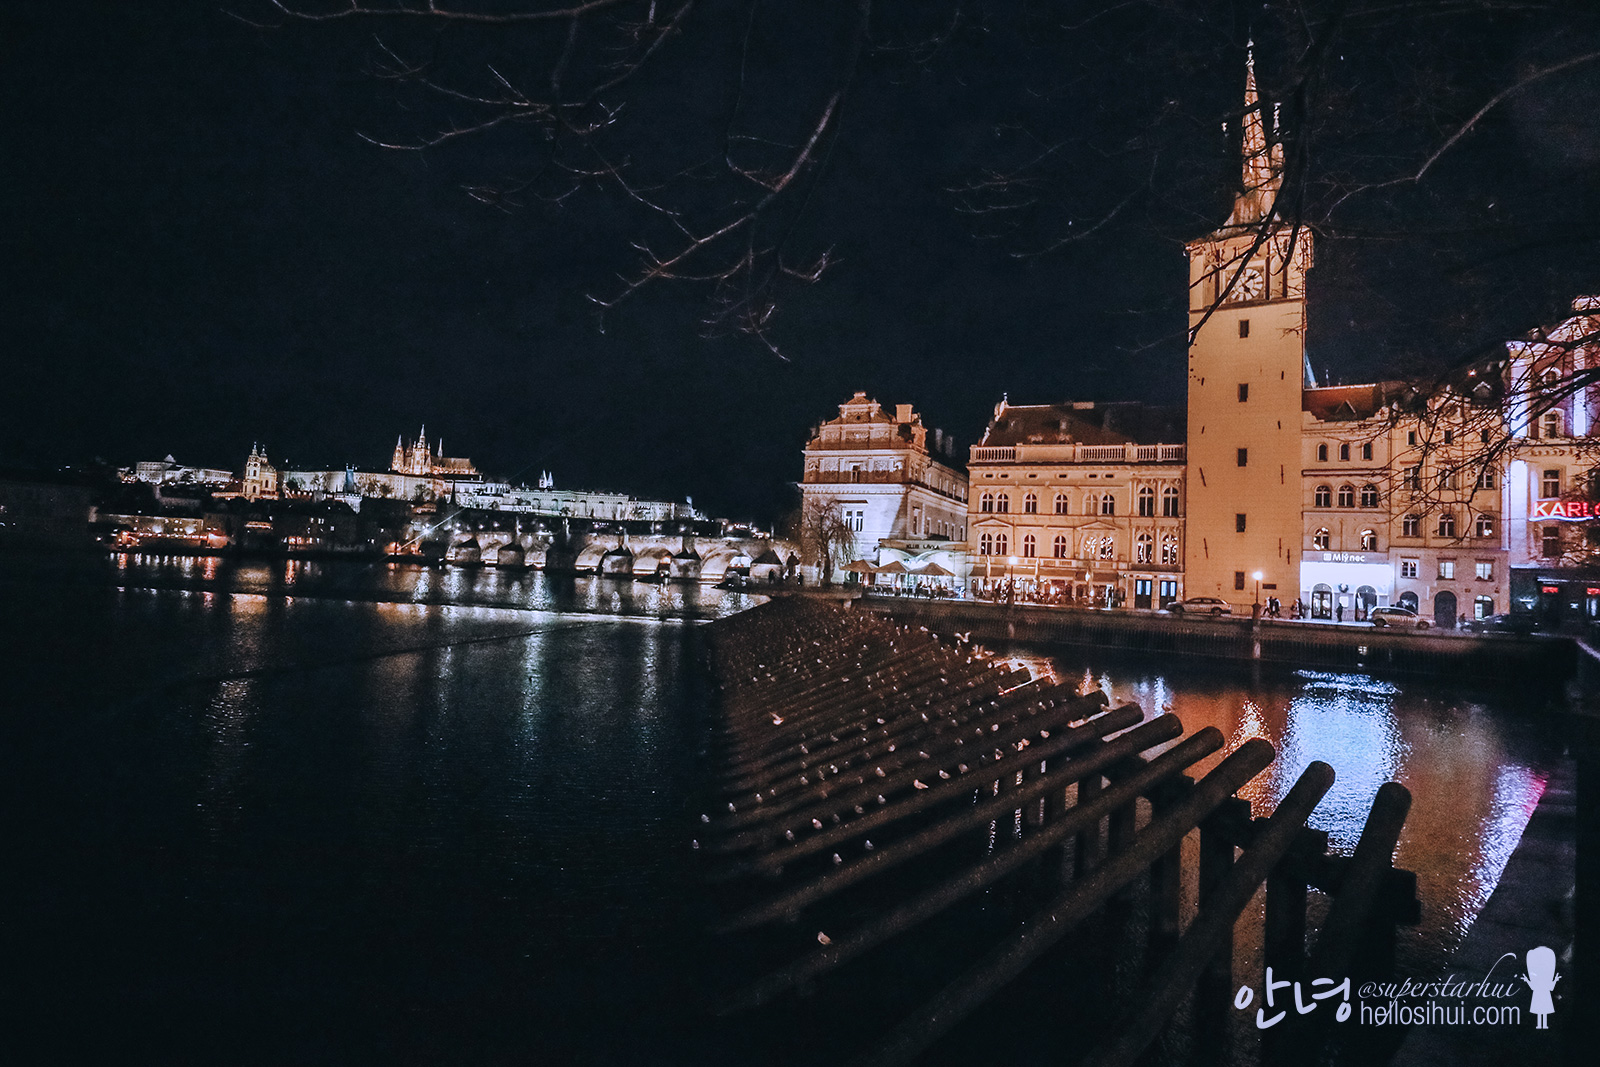 EUROPE 2018/2019 DAY 4: PRAGUE – Charles Bridge & Christmas Market (Night)